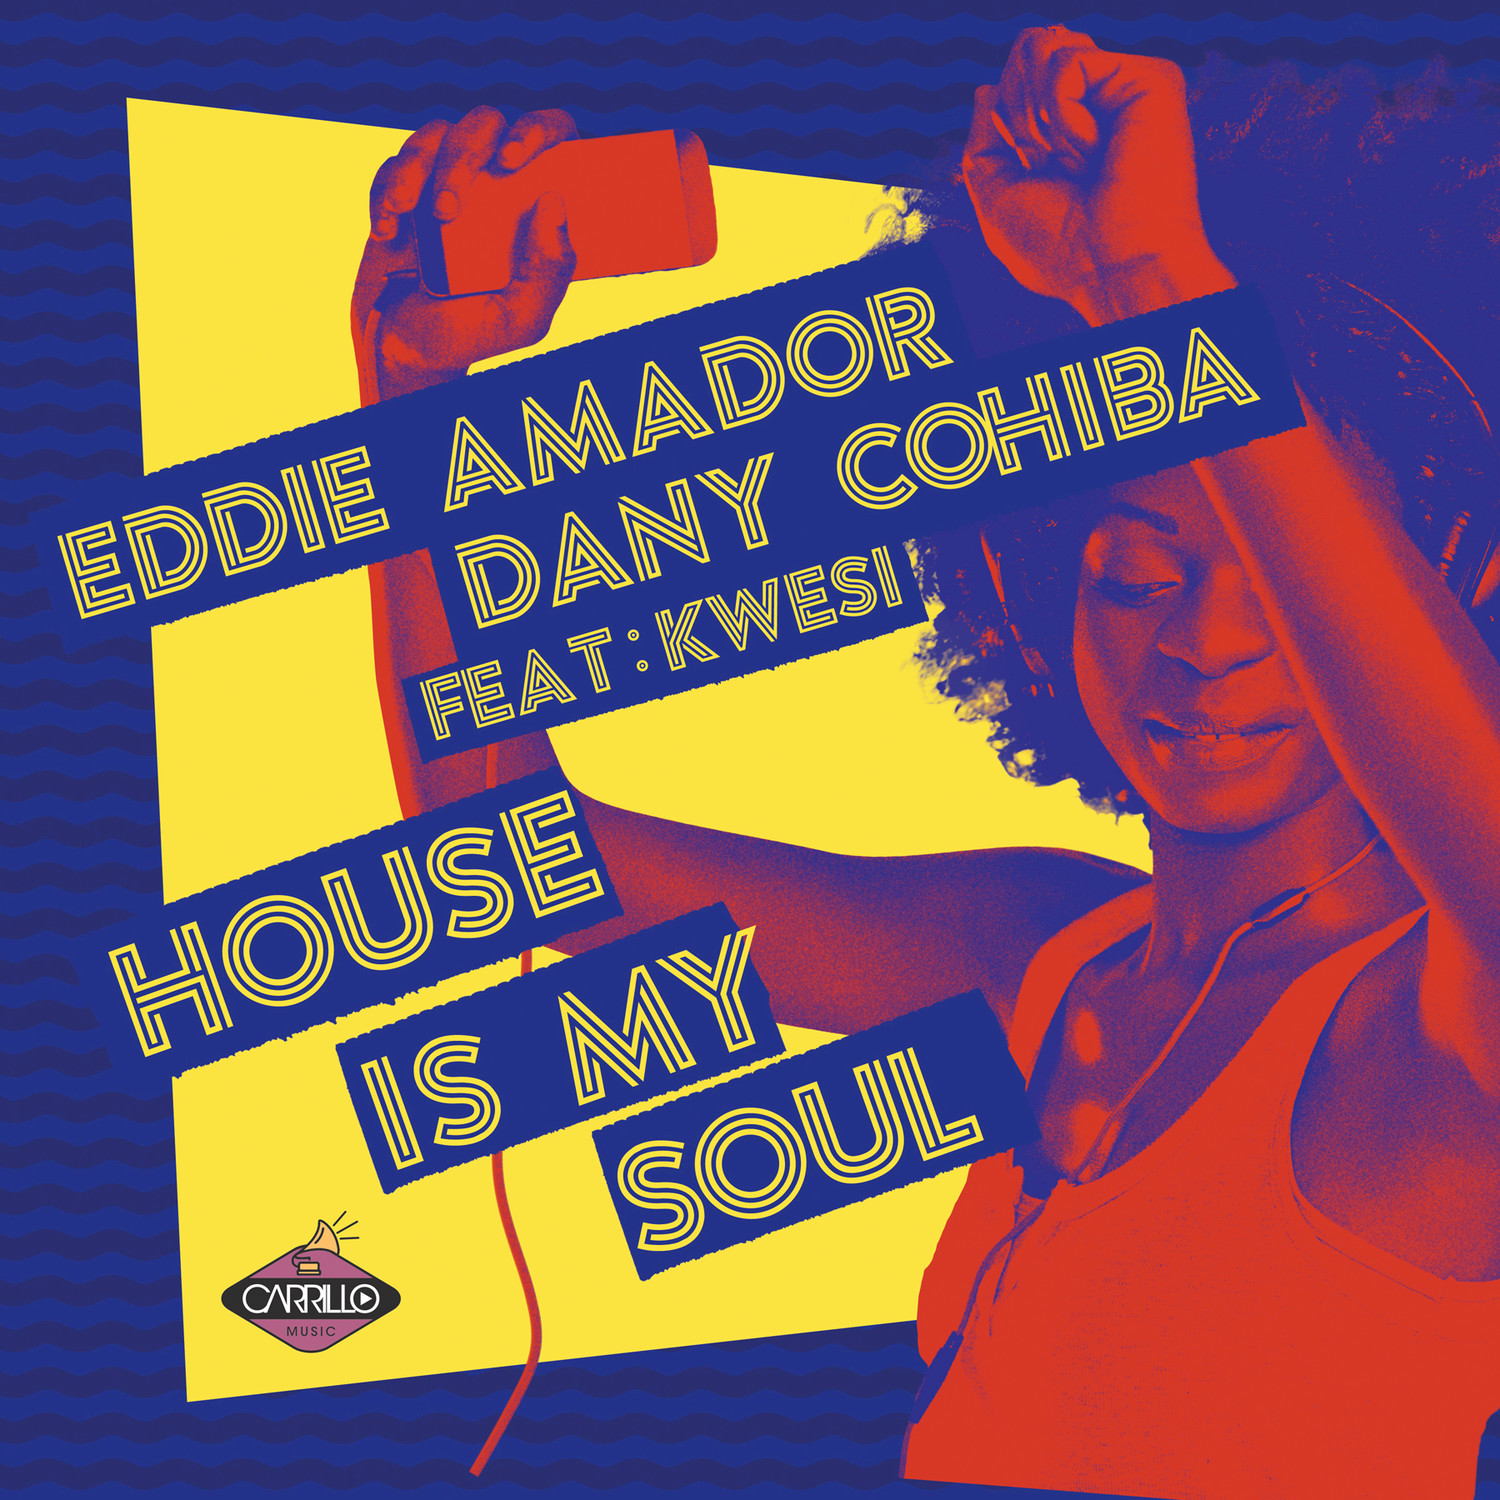 House Is My Soul (Sol N Beef's Dark Mix)